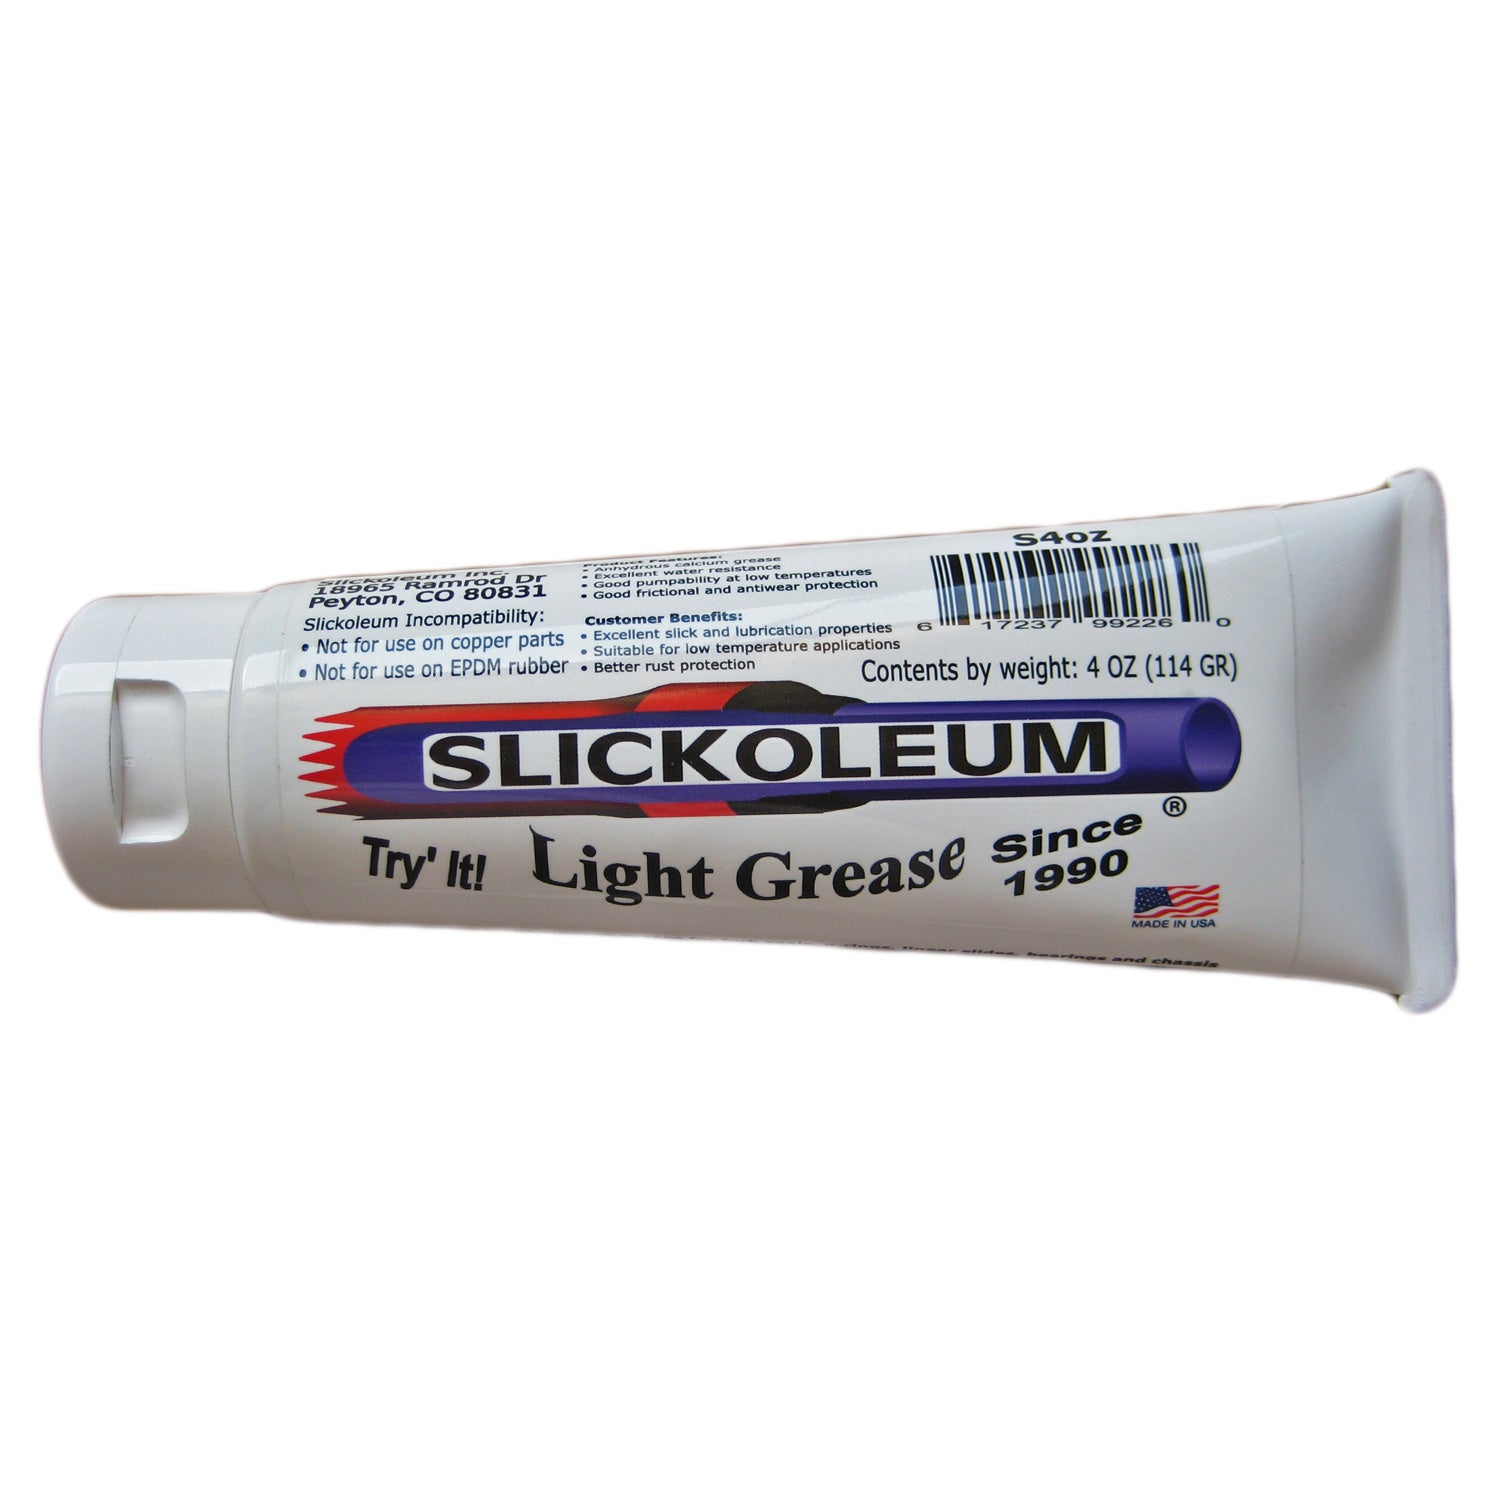 Slickoleum Friction Reducing Grease 4oz Tube